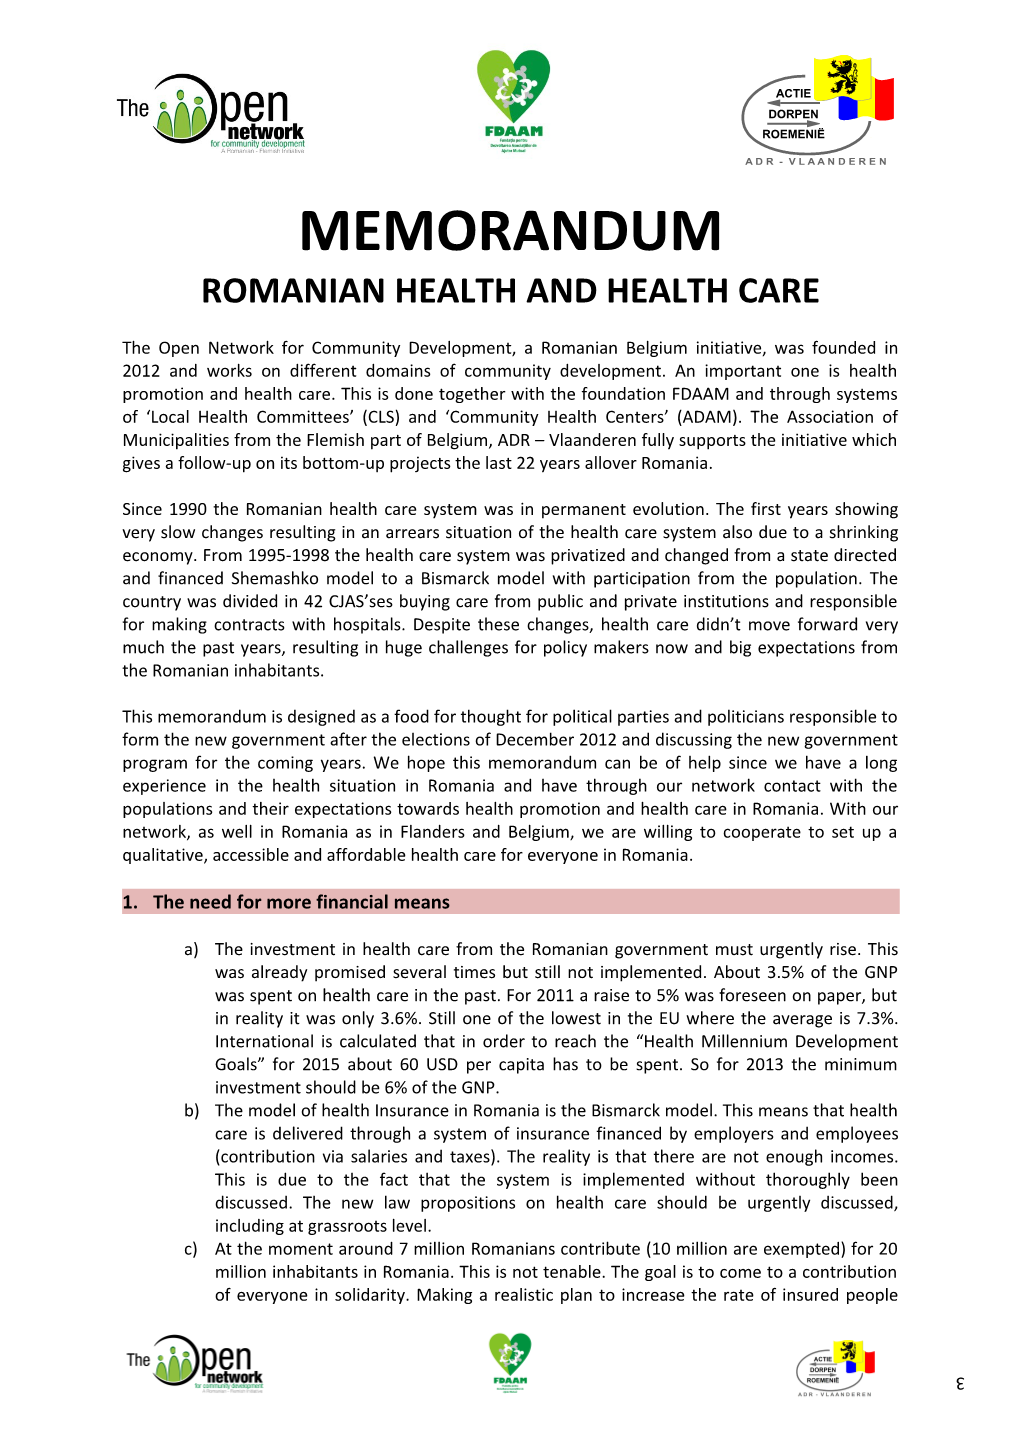 Romanian Health and Health Care